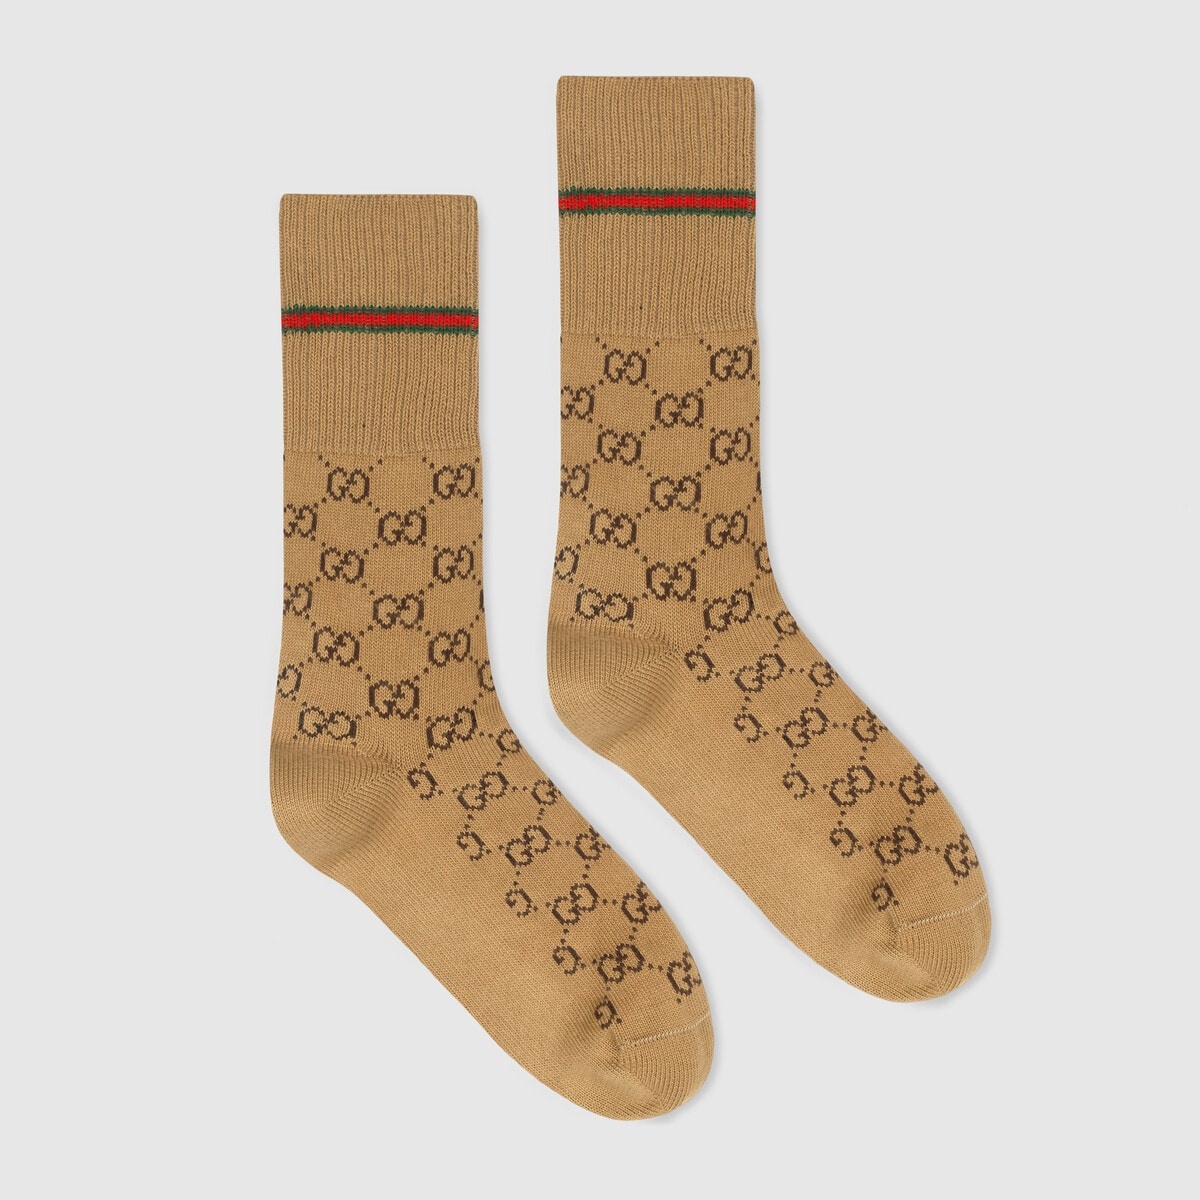 GG cotton socks with Web - 2